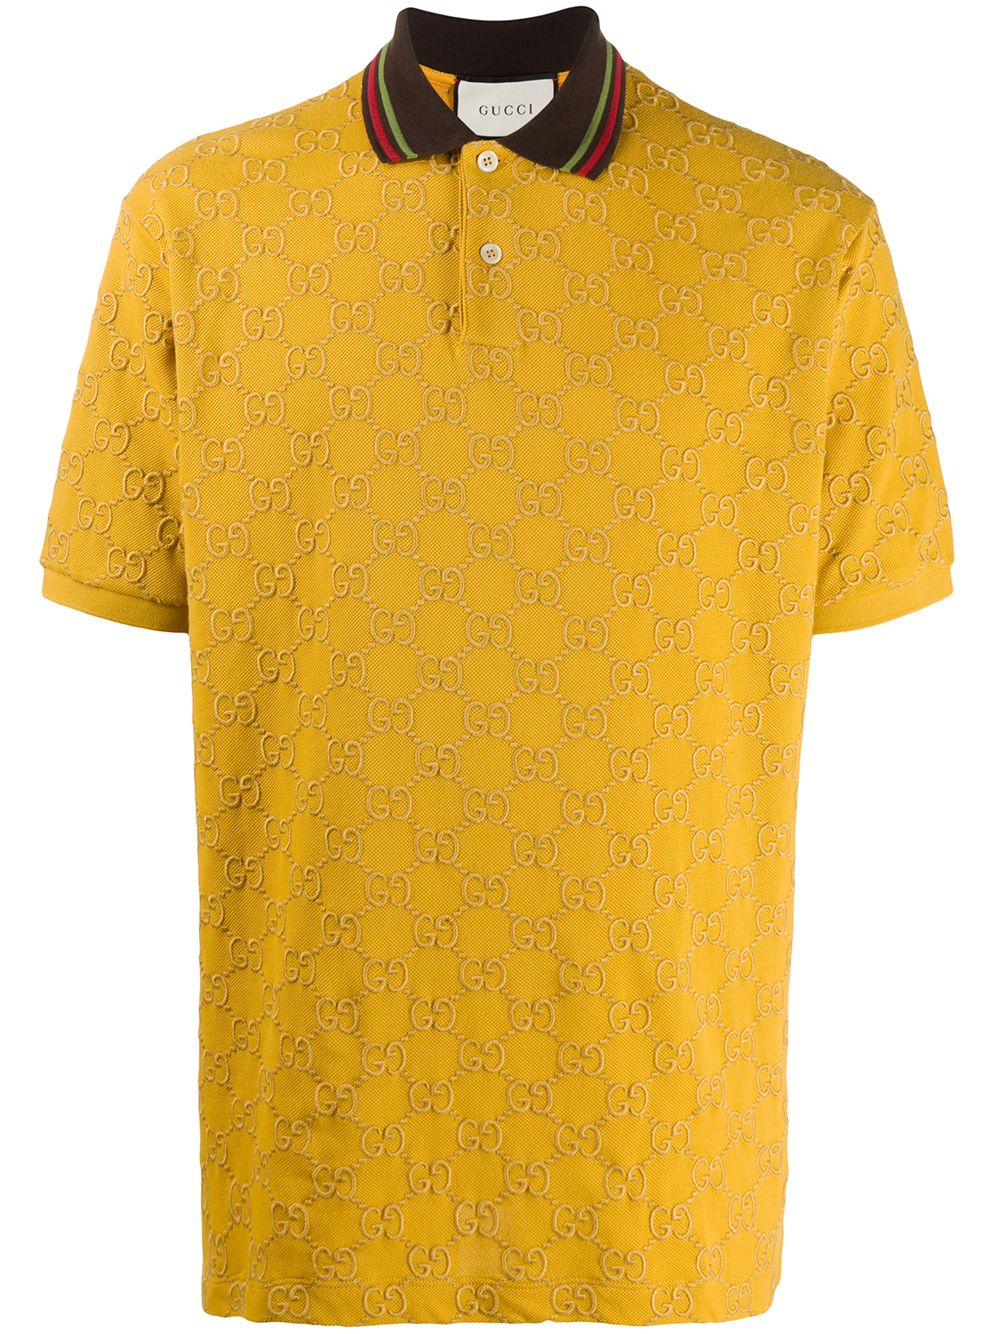 gucci shirt yellow